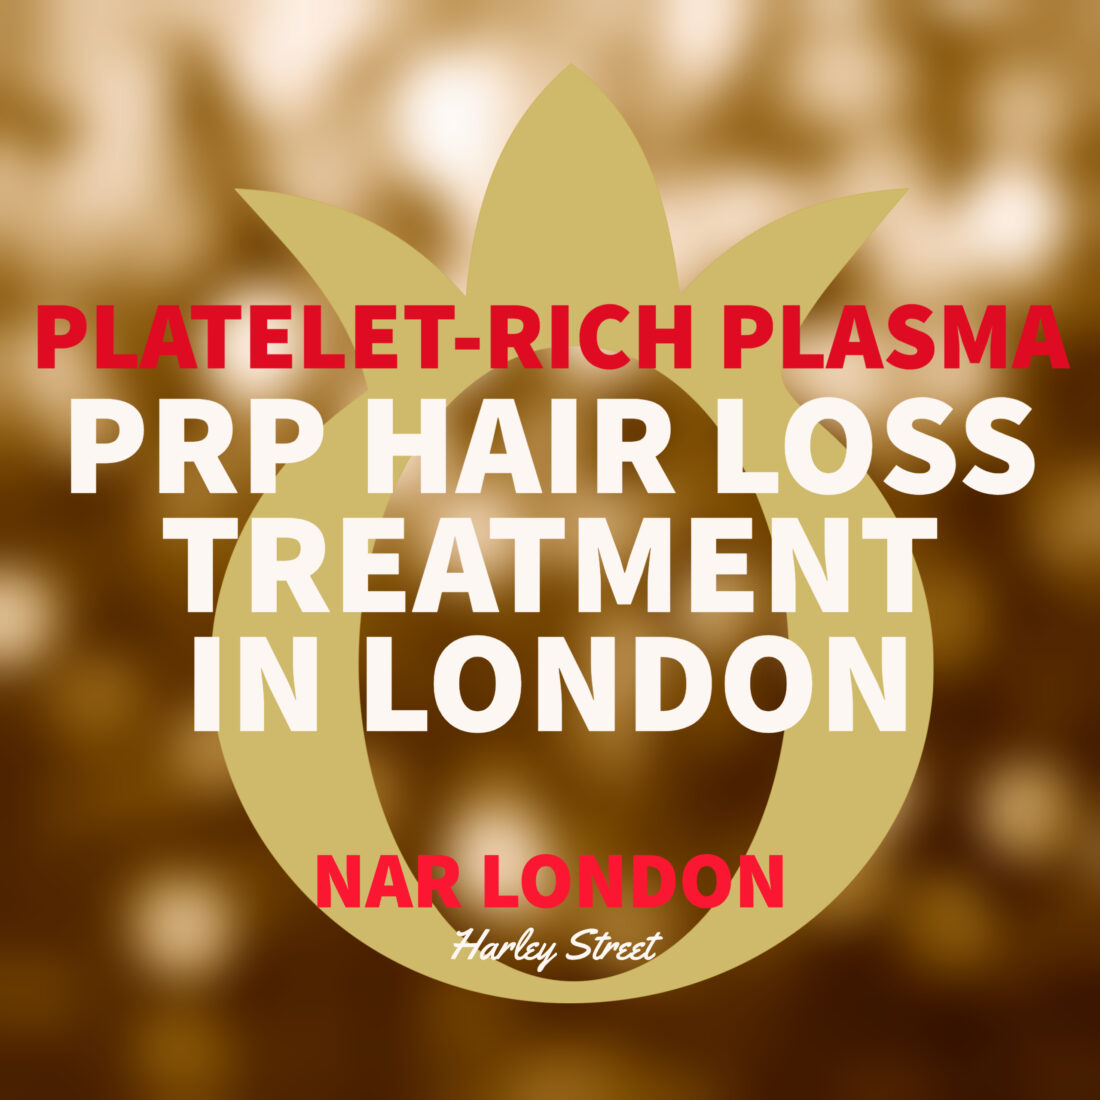 PRP hair loss treatment in london